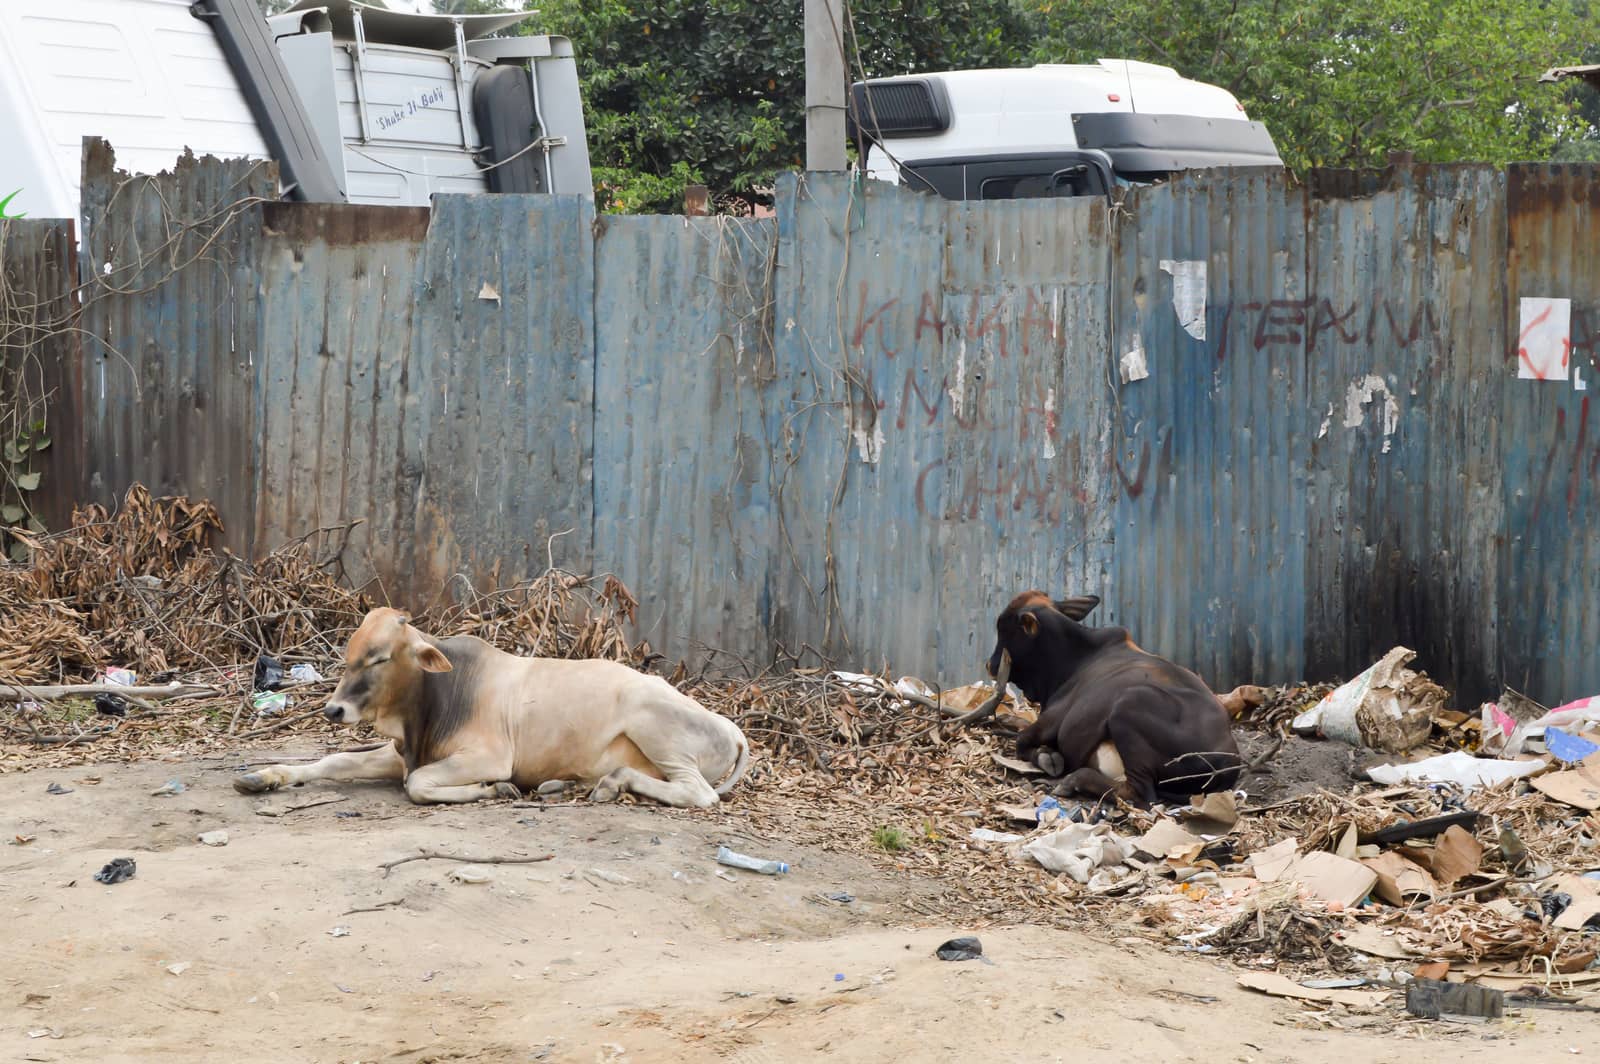 Two cows sleeping on refuse on a street in Mombasa, Kenya